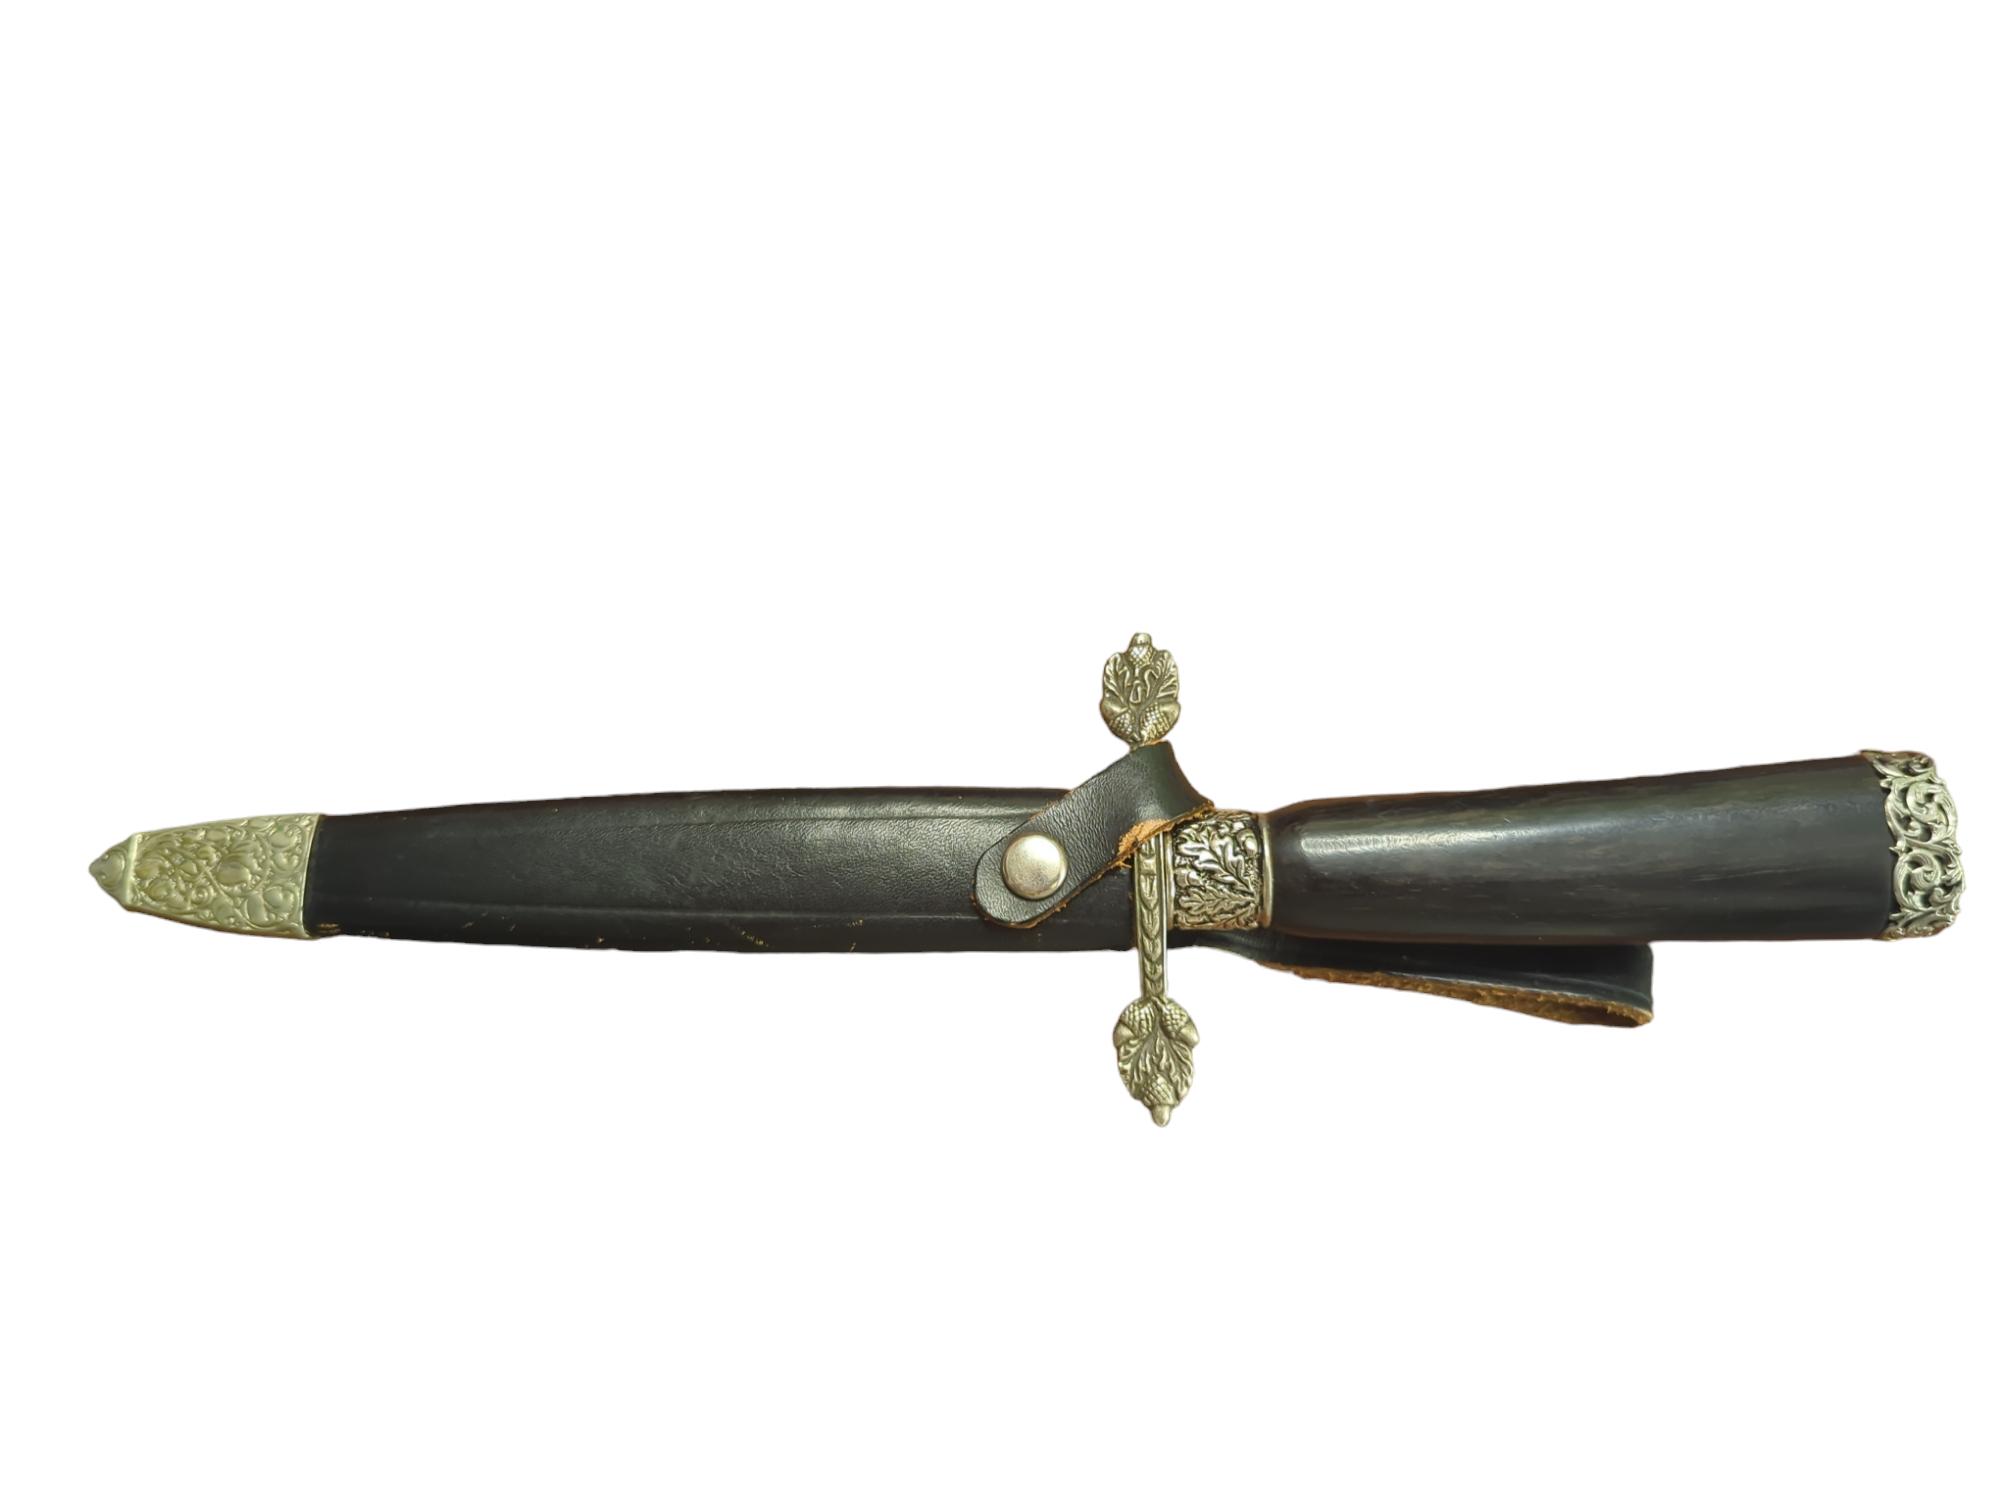 11.5" jagged dagger knife with sheath